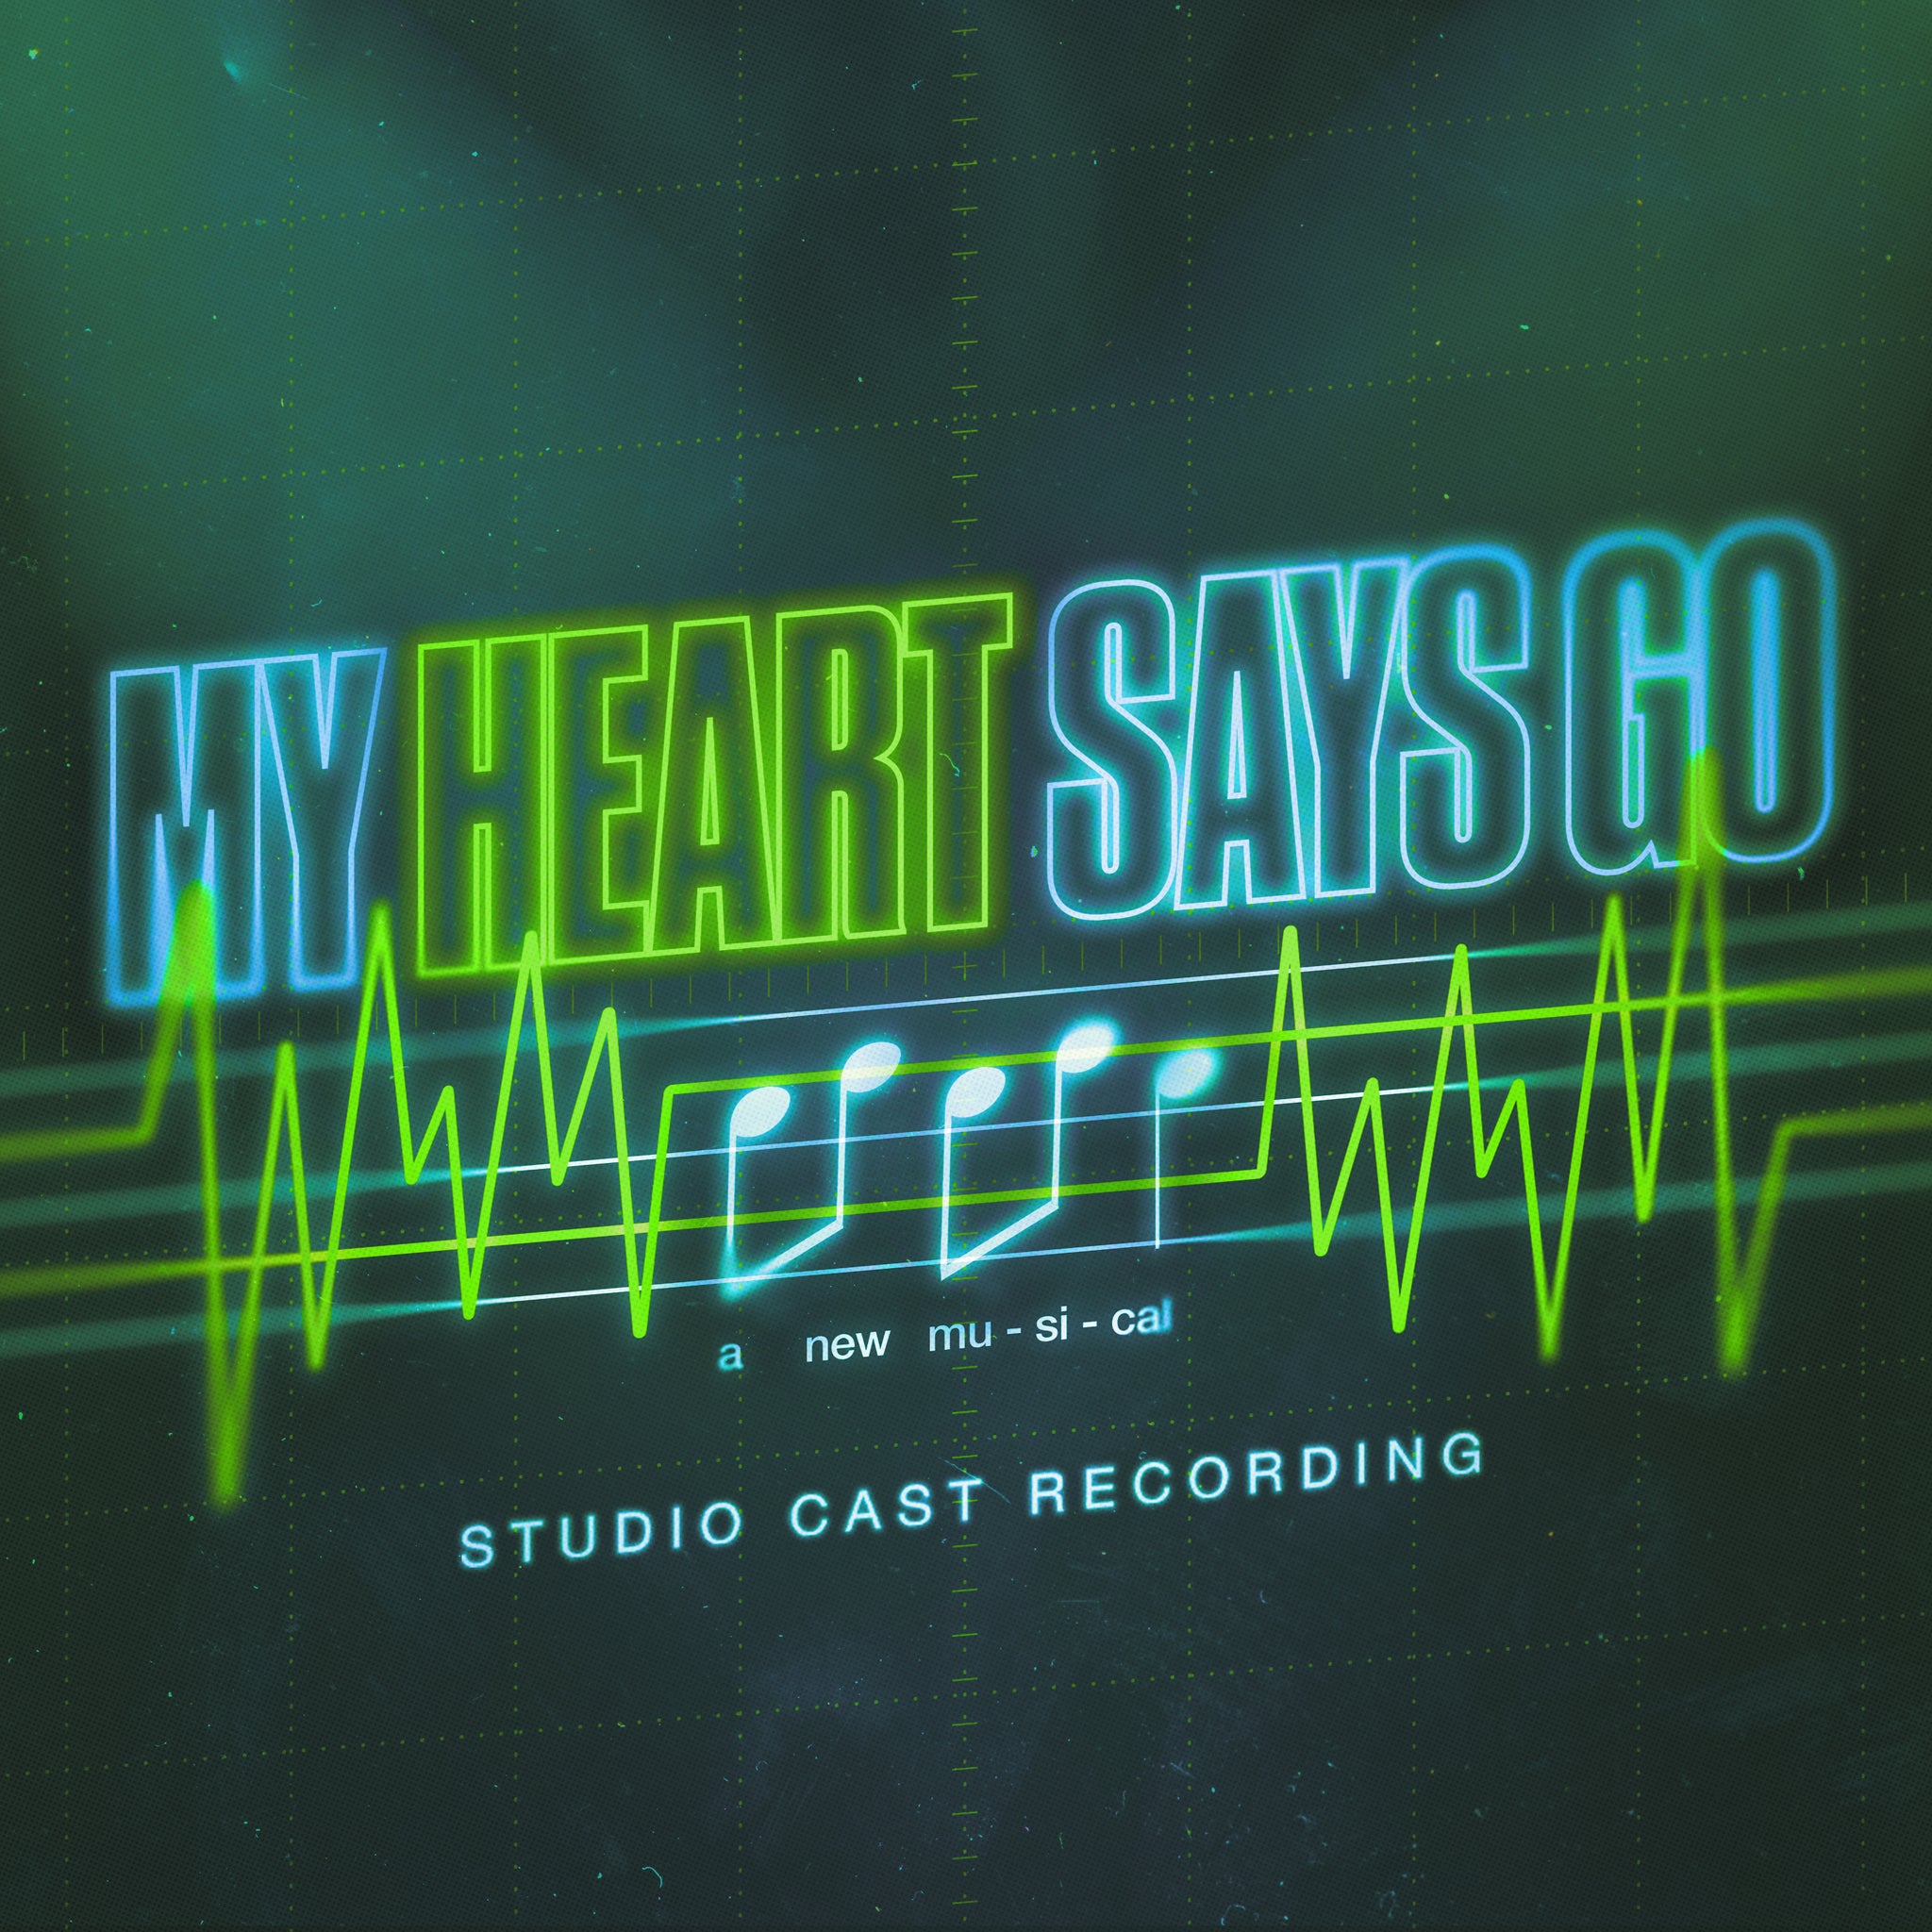 My Heart Says Go (Studio Cast Recording) [MP3]